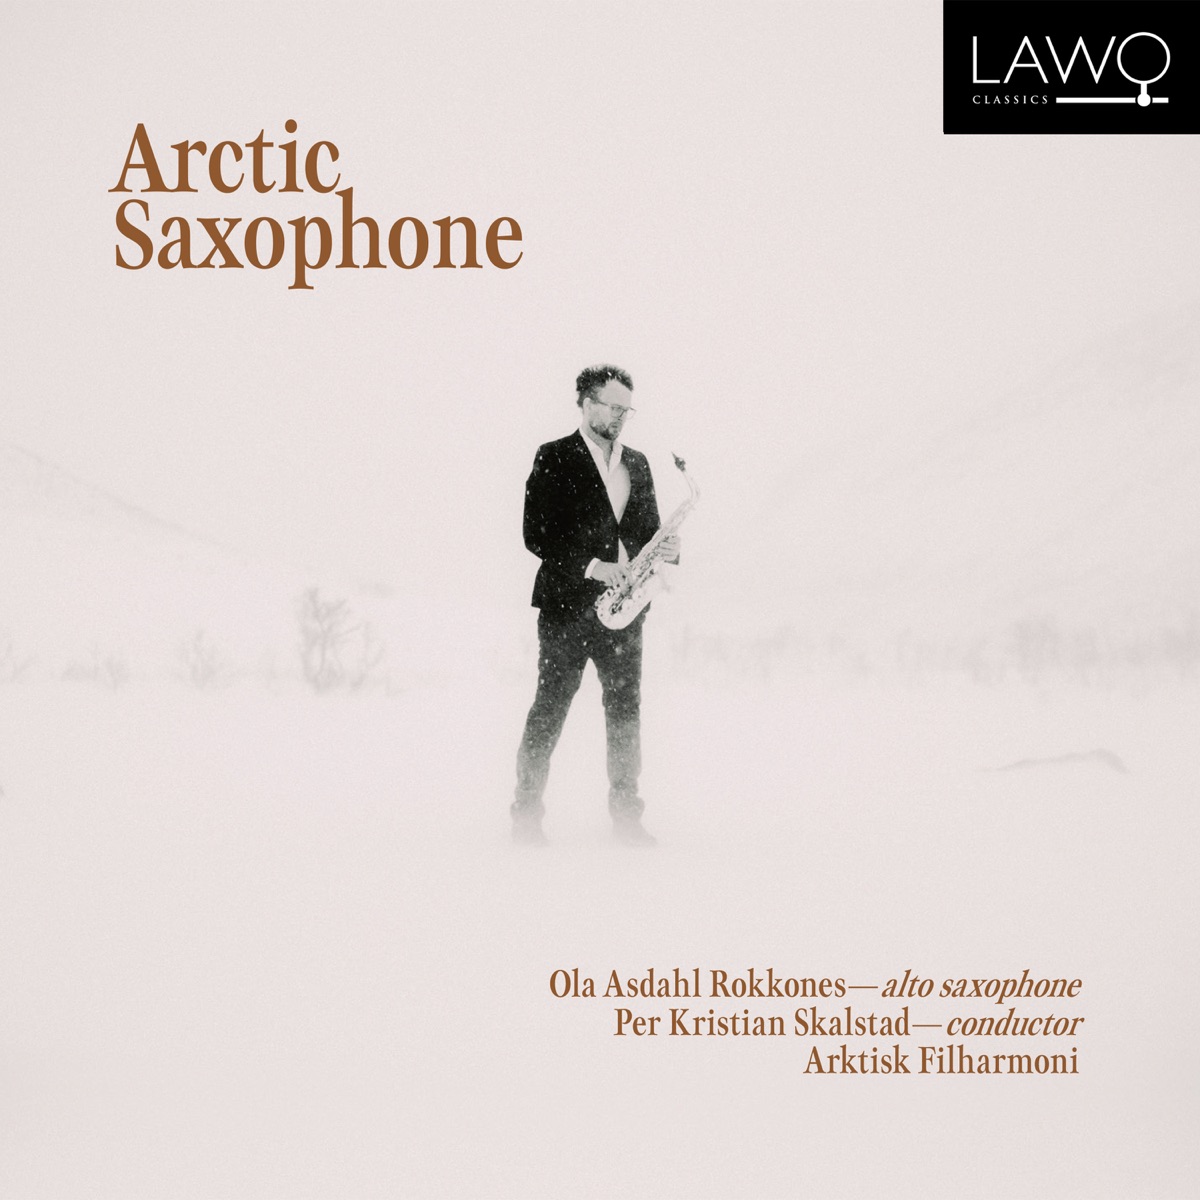 Arctic Saxophone - Album by Ola Asdahl Rokkones, Arktisk Filharmoni & Per  Kristian Skalstad - Apple Music